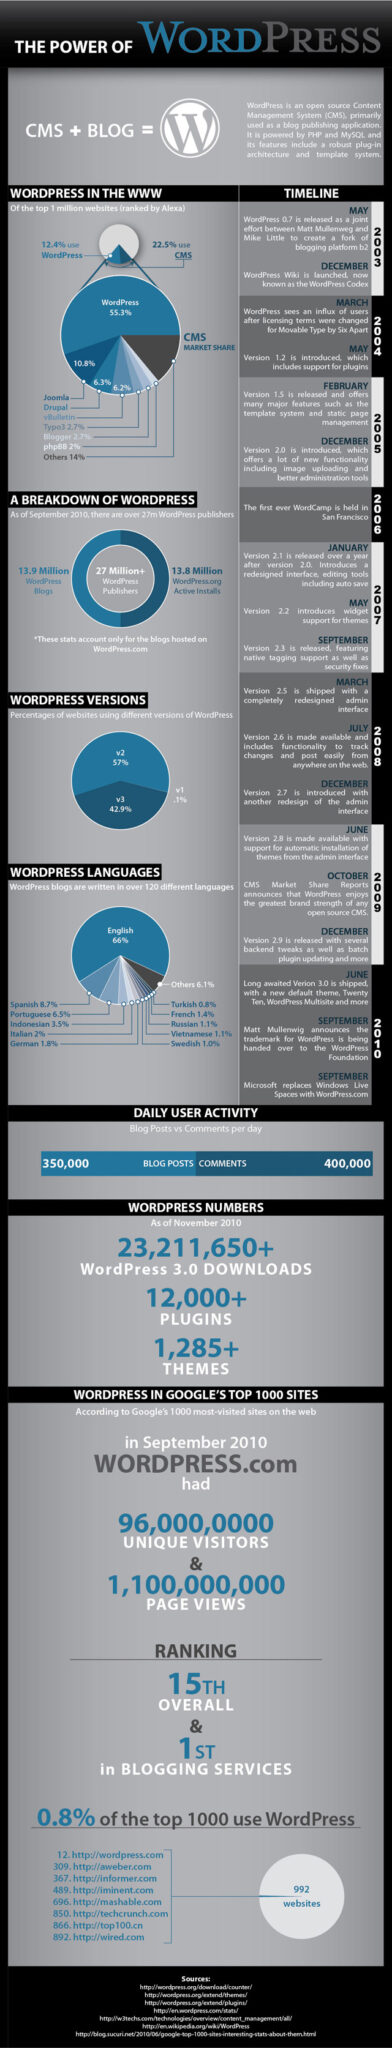 power of wordpress infographic